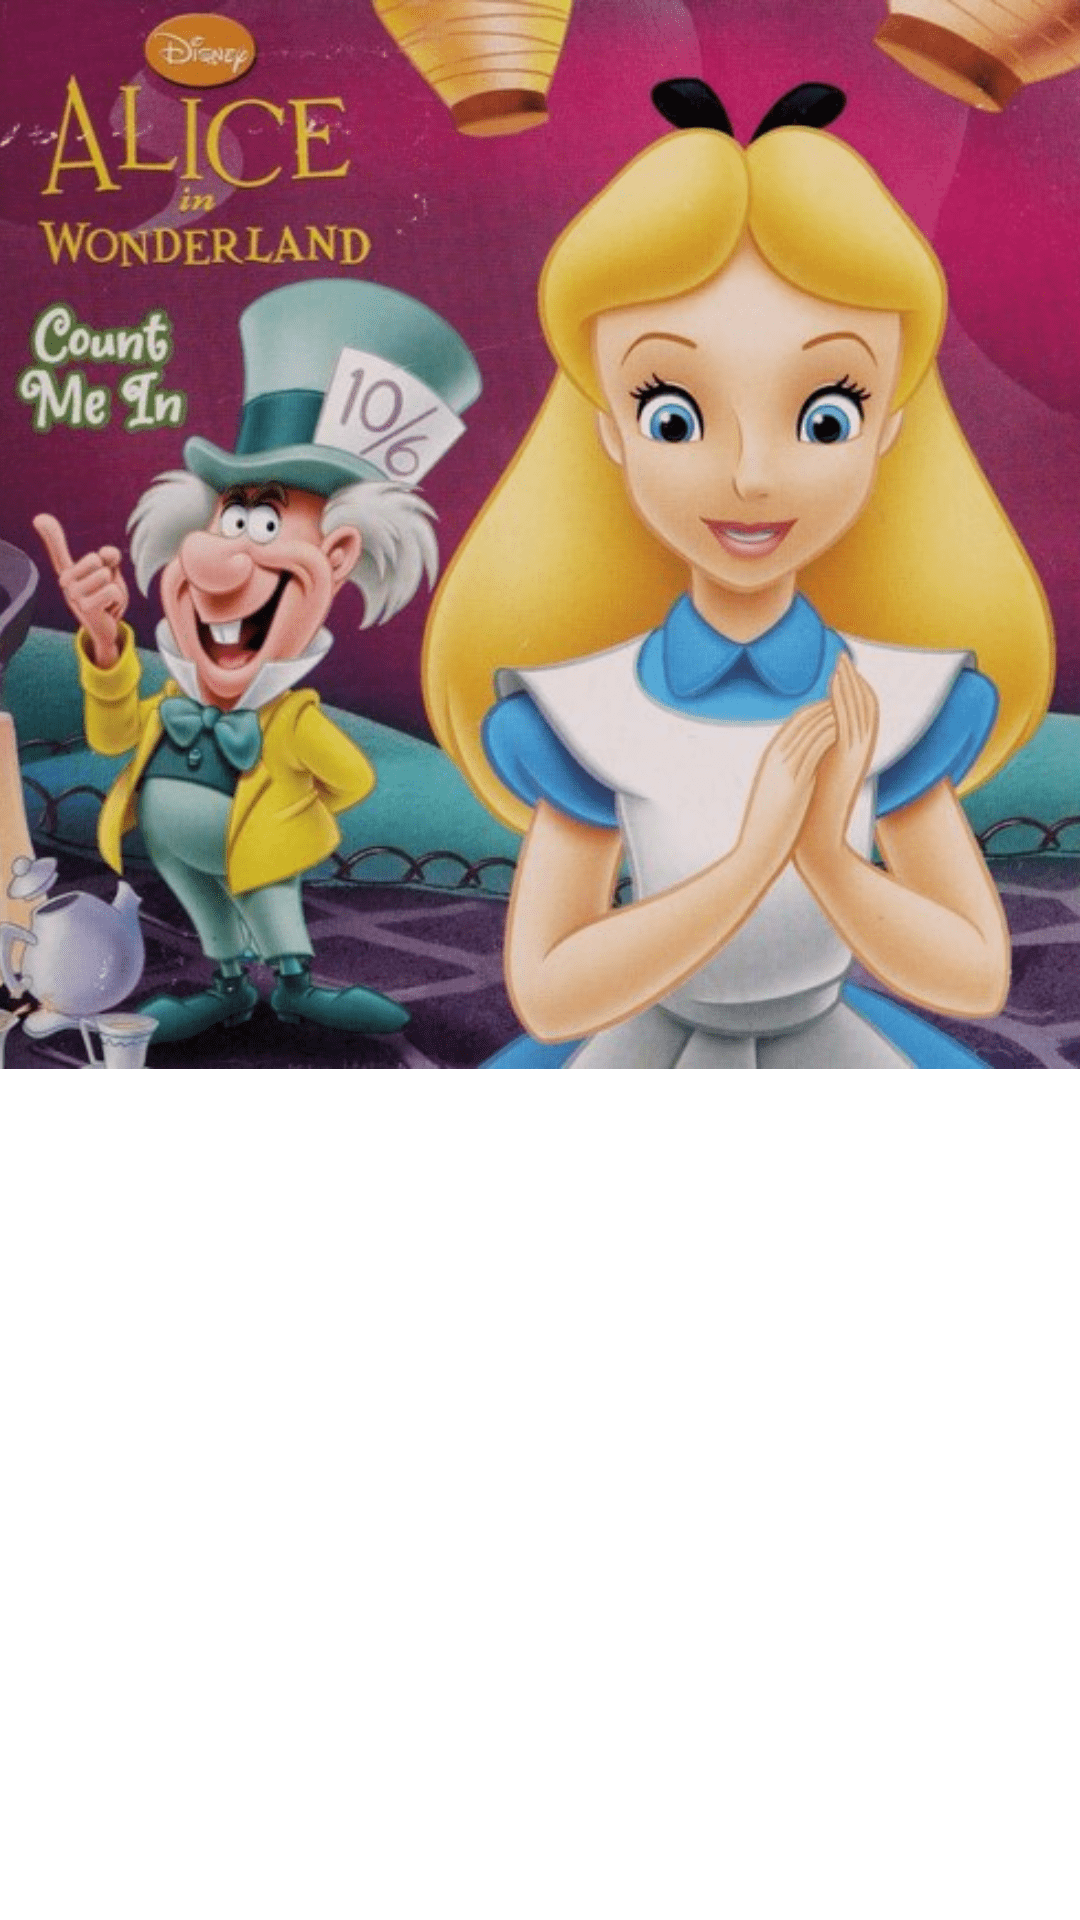 Disney　in　Me　in　Disney　Wonderland:　Group　Alice　Books　kenya　Count　Book　by　|Attic